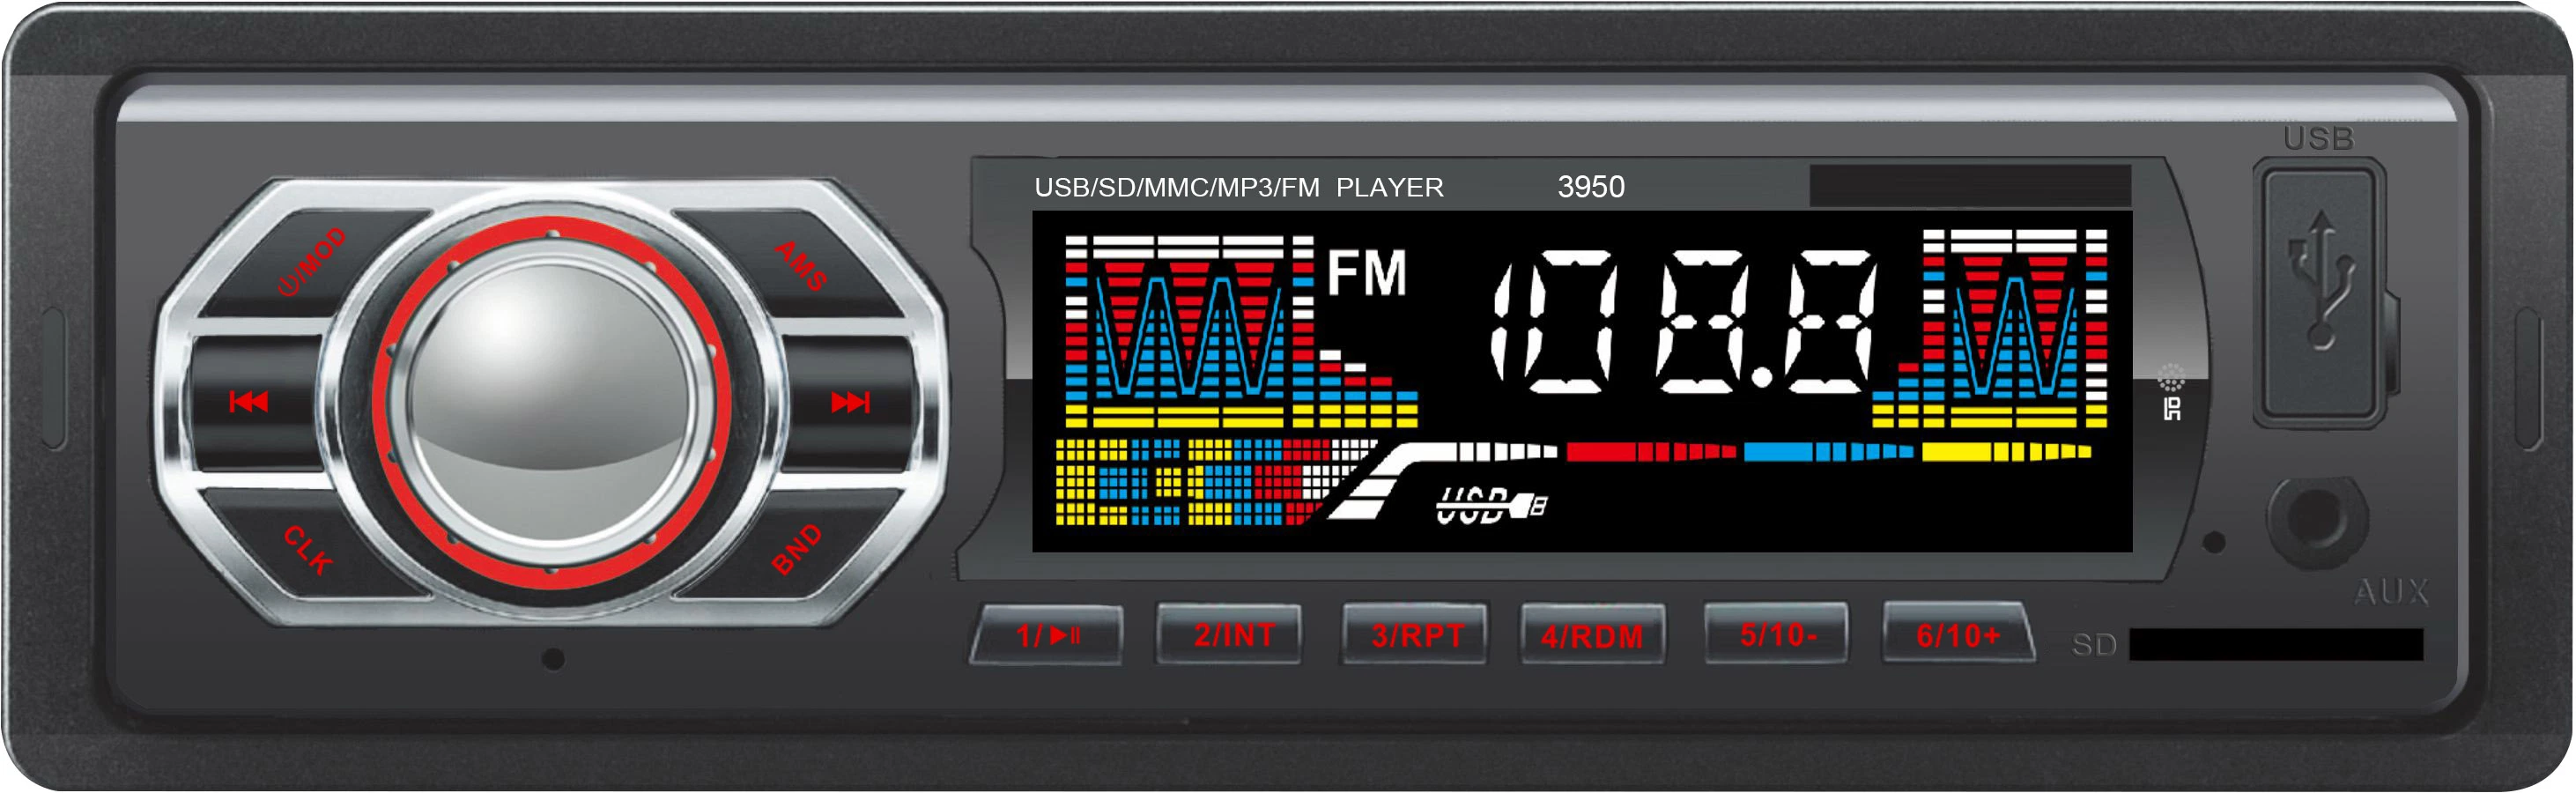 Double USB Car Digital Media Receiver Car MP3 Audio Player